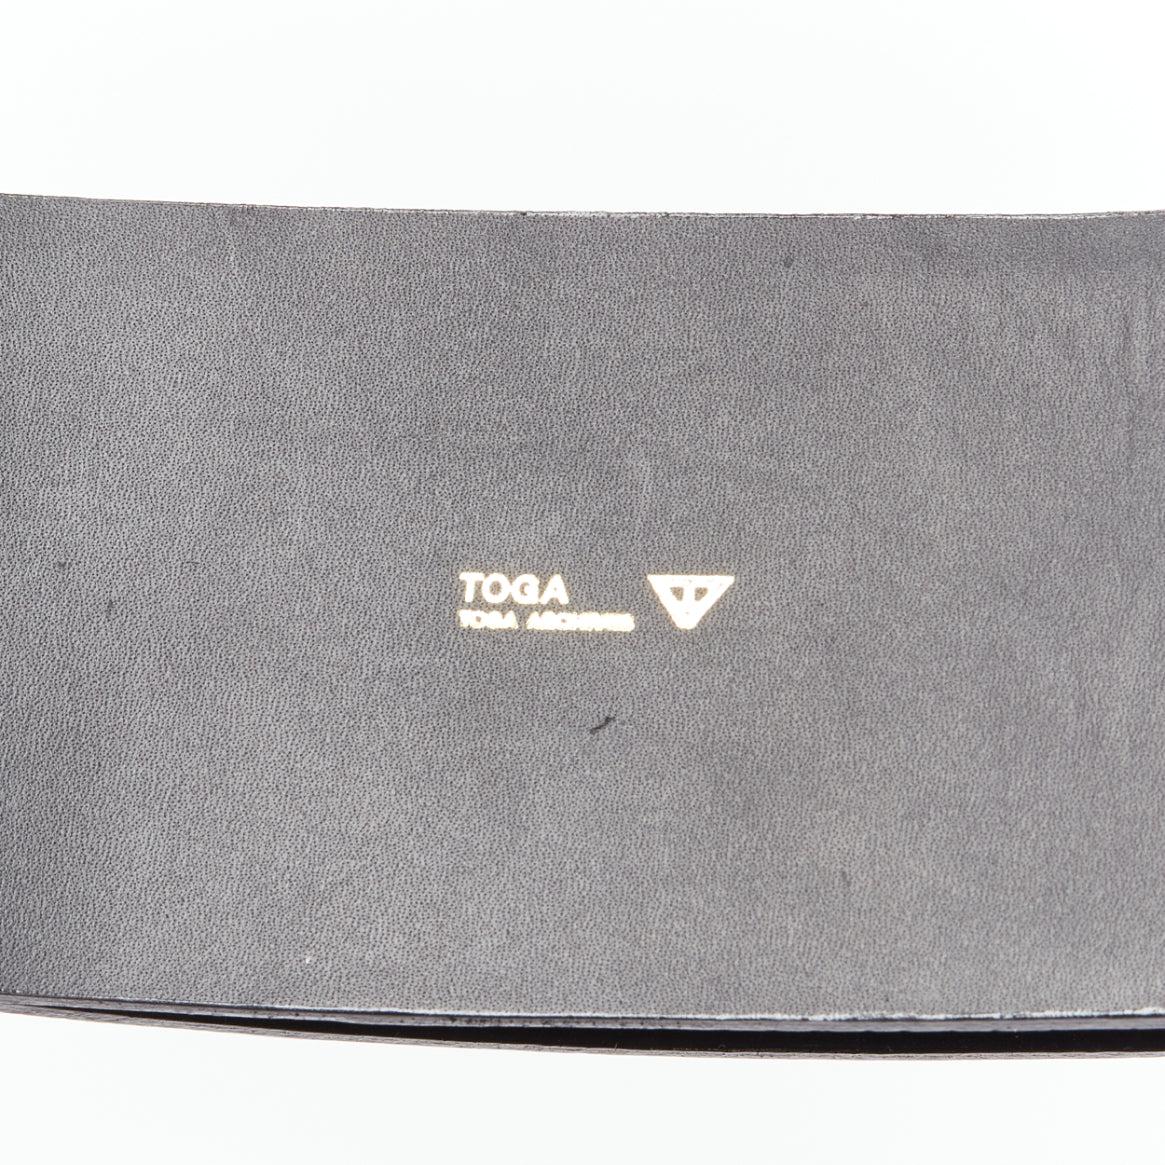 TOGA ARCHIVES black wide embossed leather buckle statement belt For Sale 4